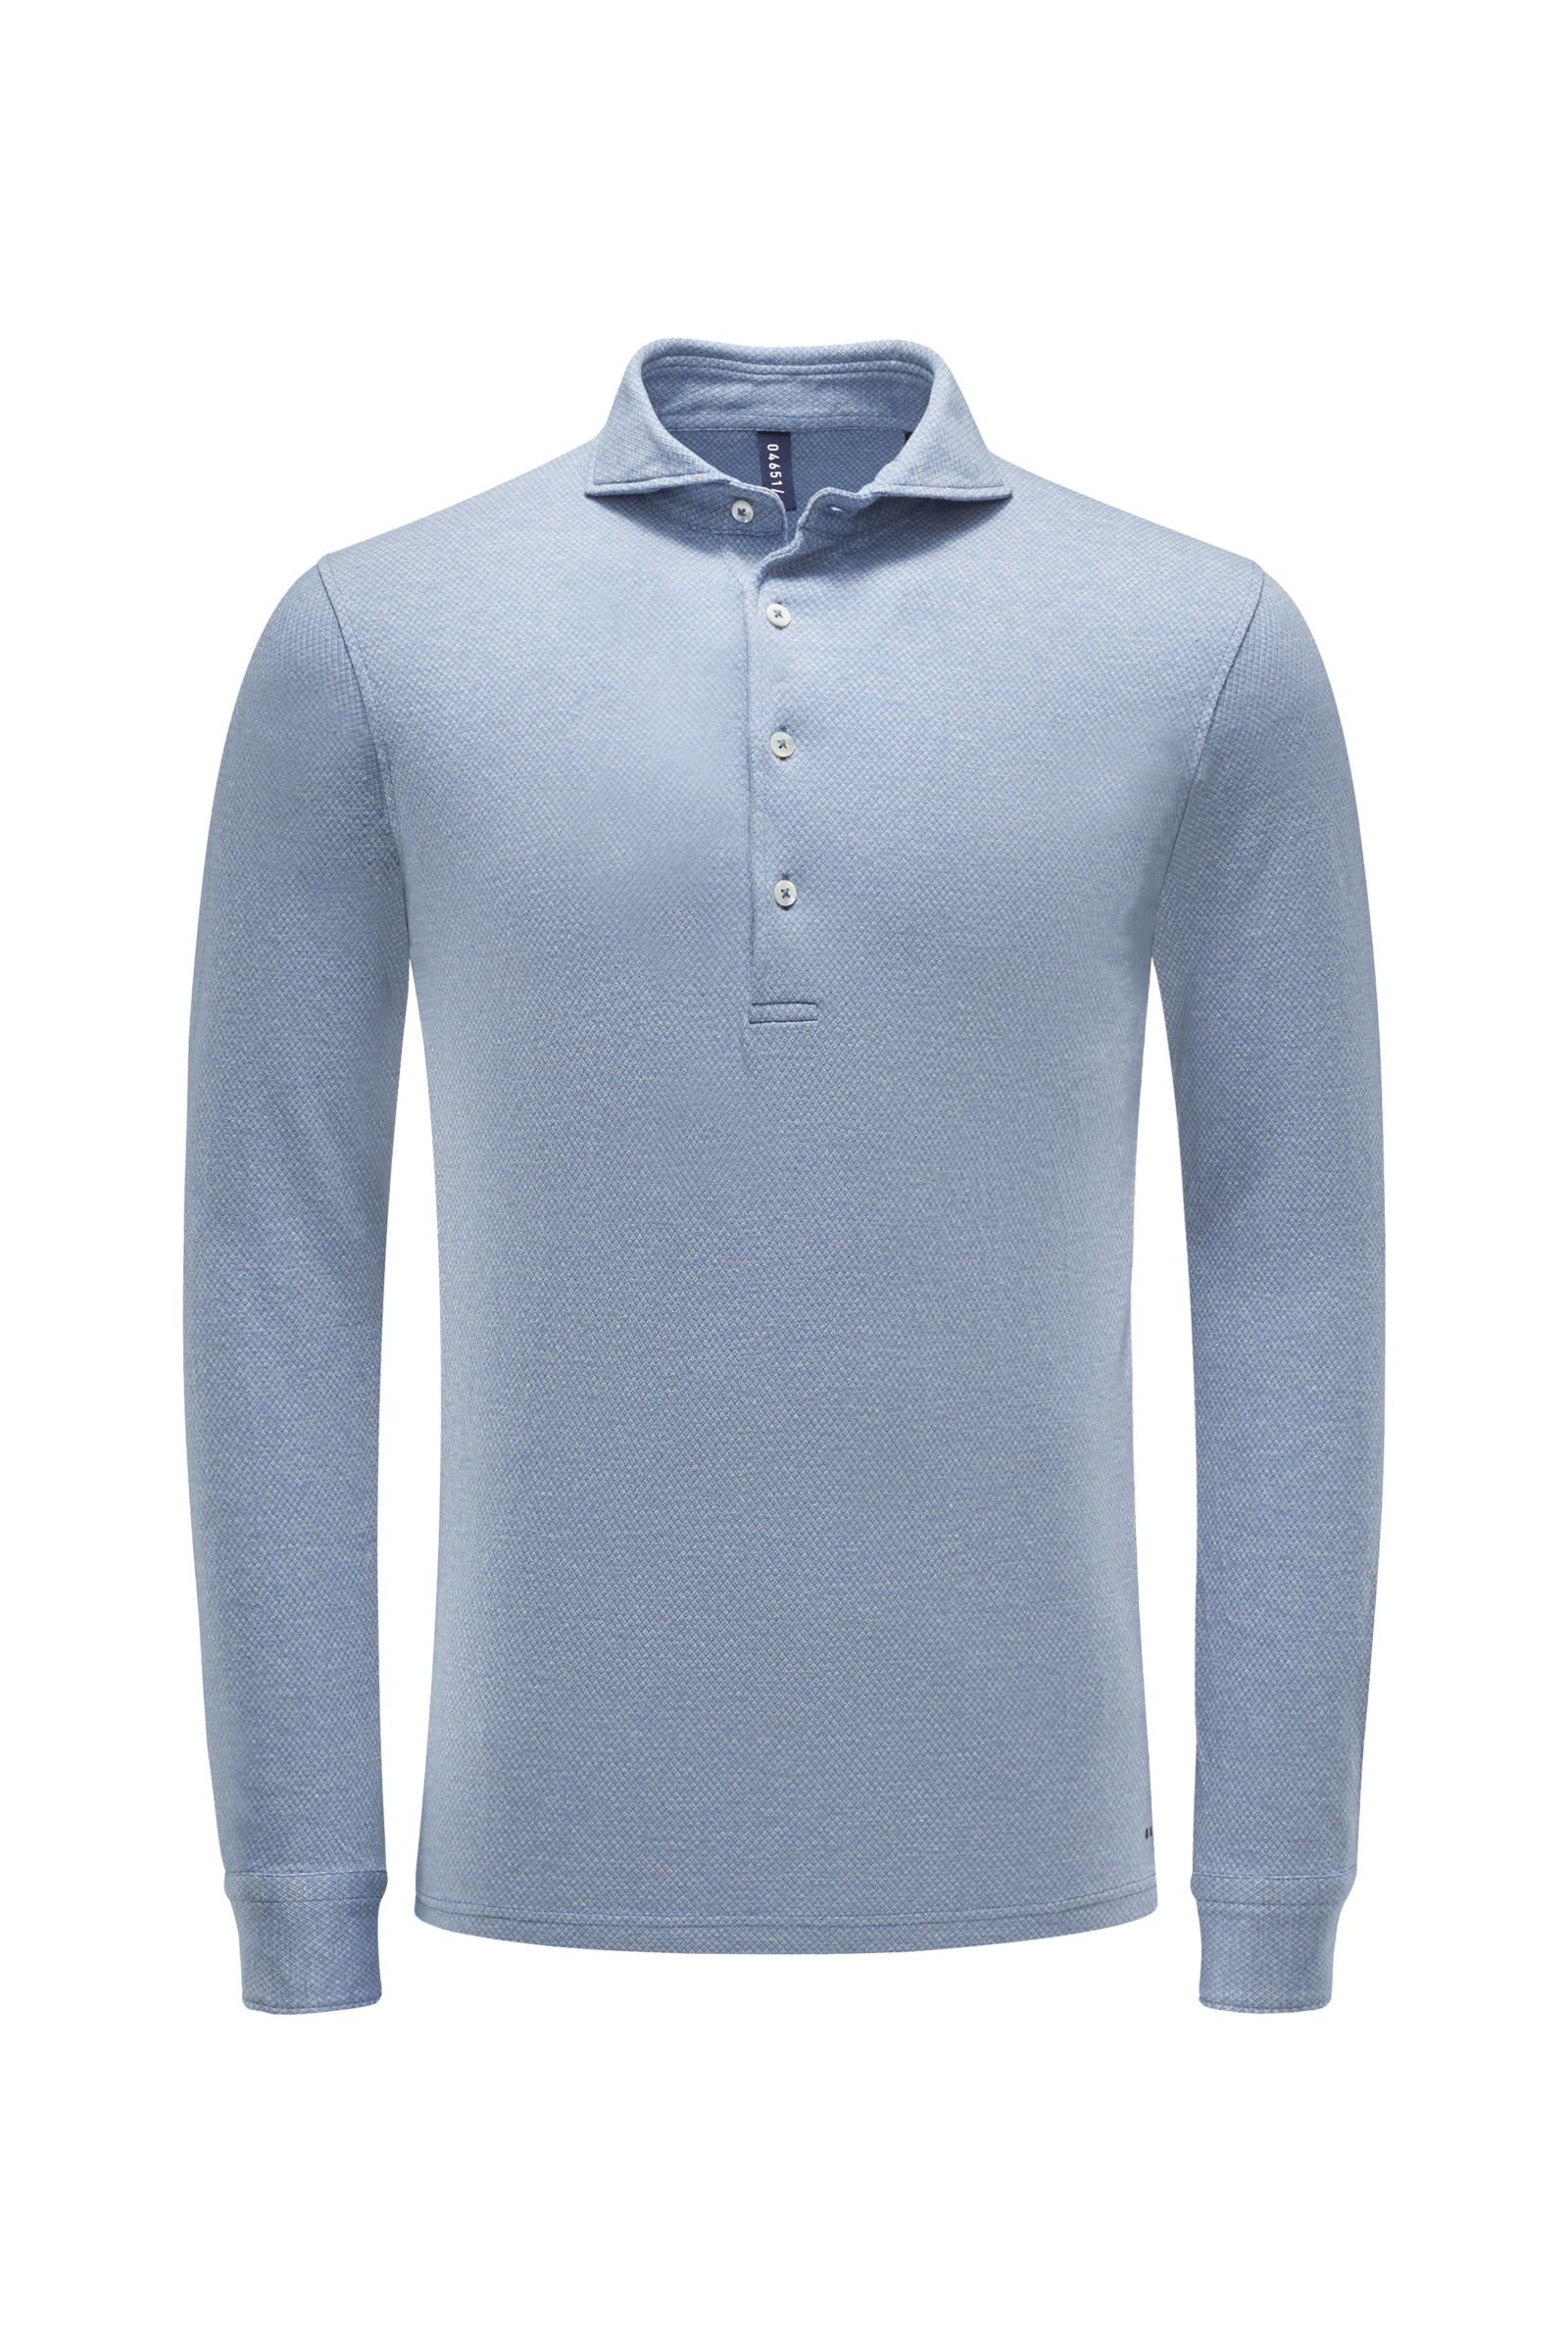 Long sleeve polo shirt, smoky blue patterned